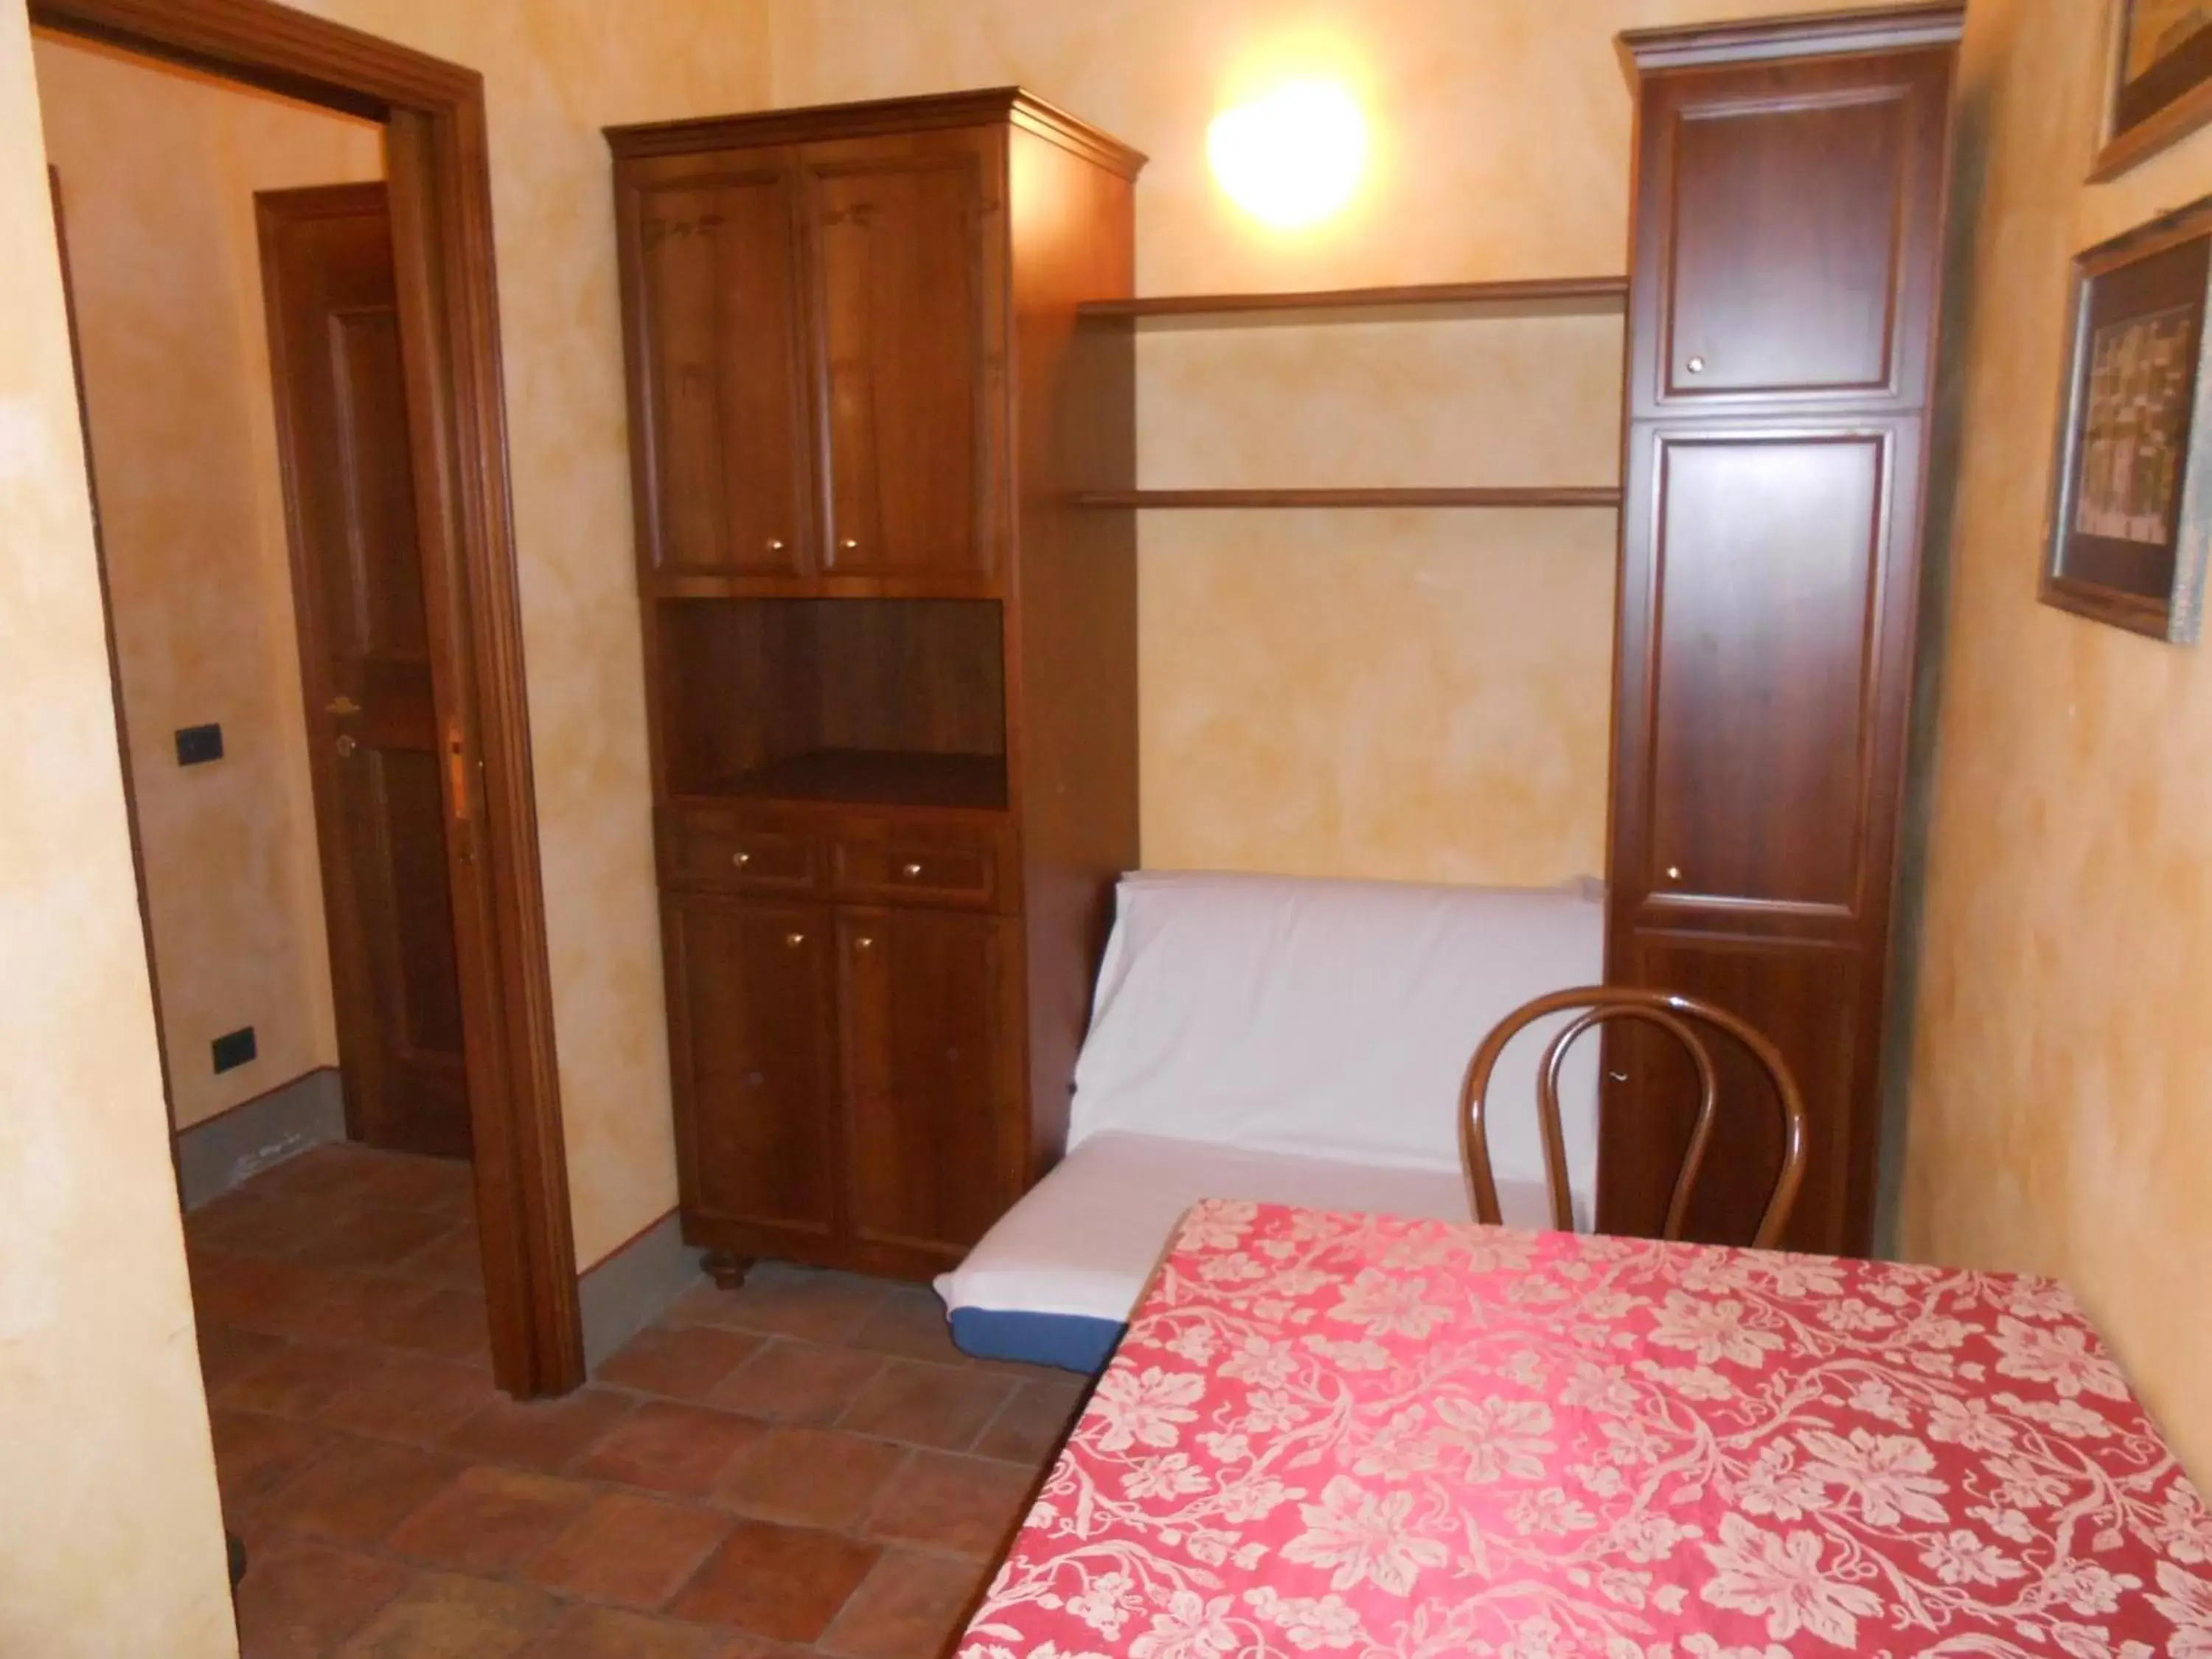 Area and facilities, Room Photo in Lo Spedalicchio